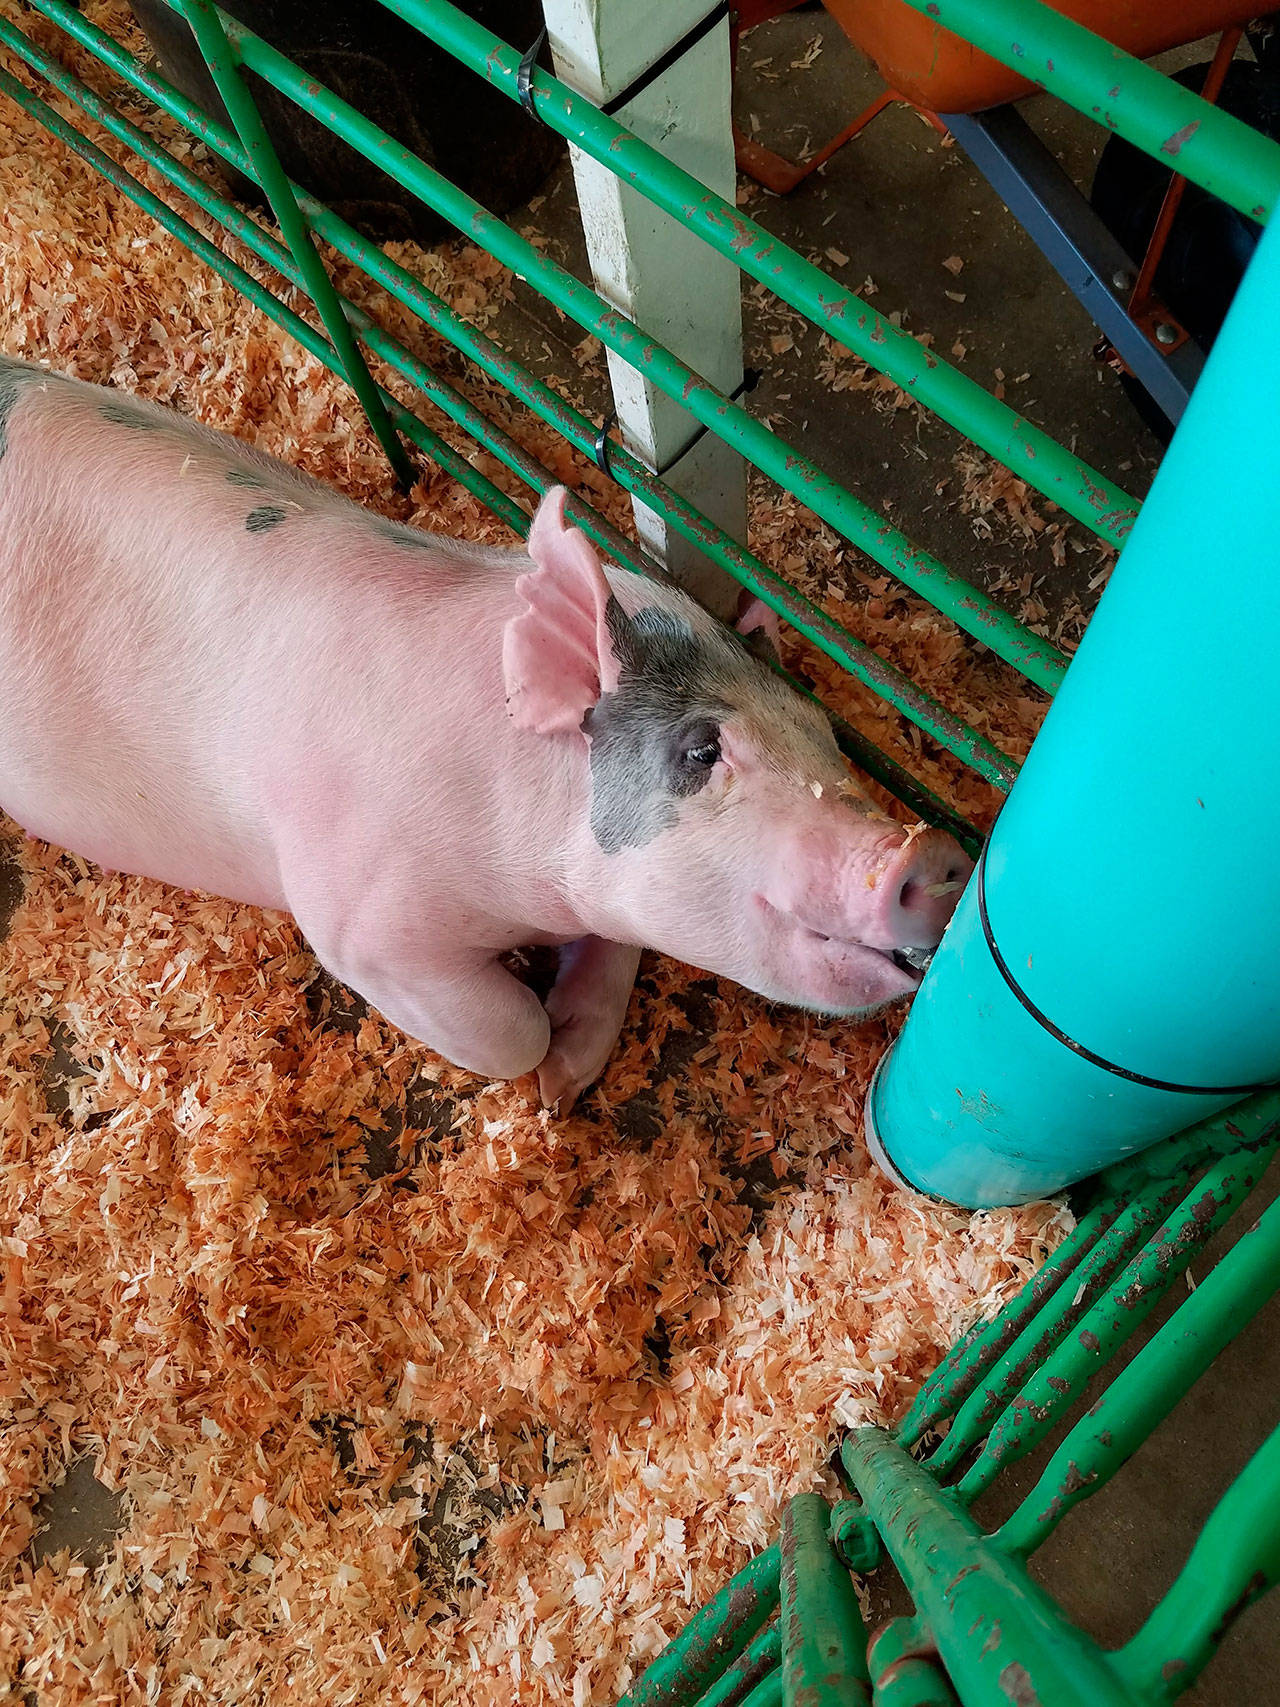 Pigs will be on display at the Kitsap 4-H club exhibit. (Photo courtesy Katrina Bastian)